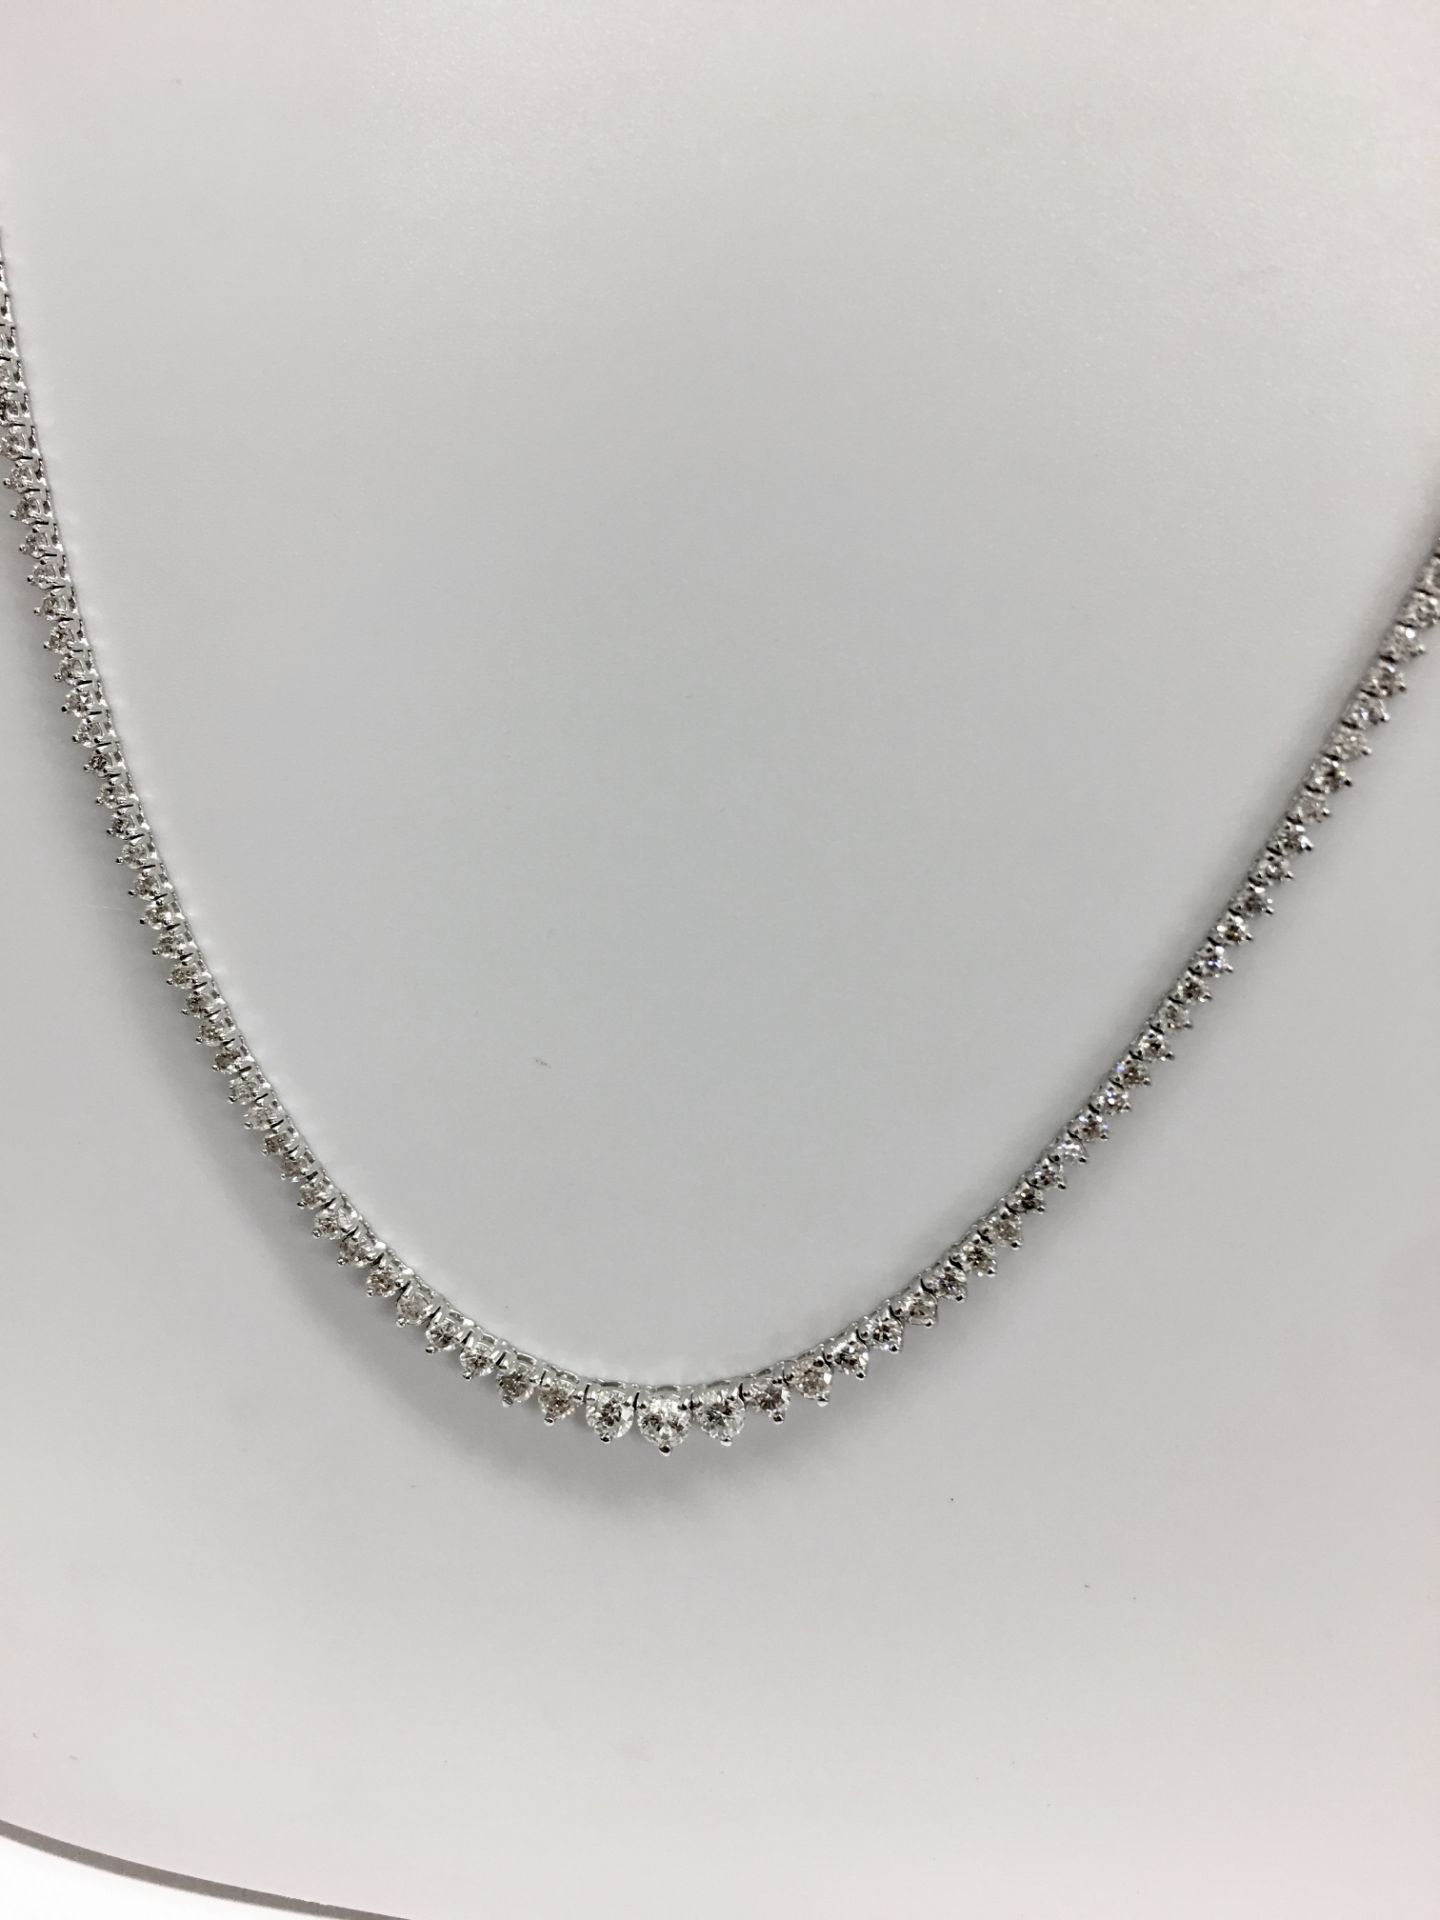 15ct Diamond tennis style Necklace - Image 4 of 5